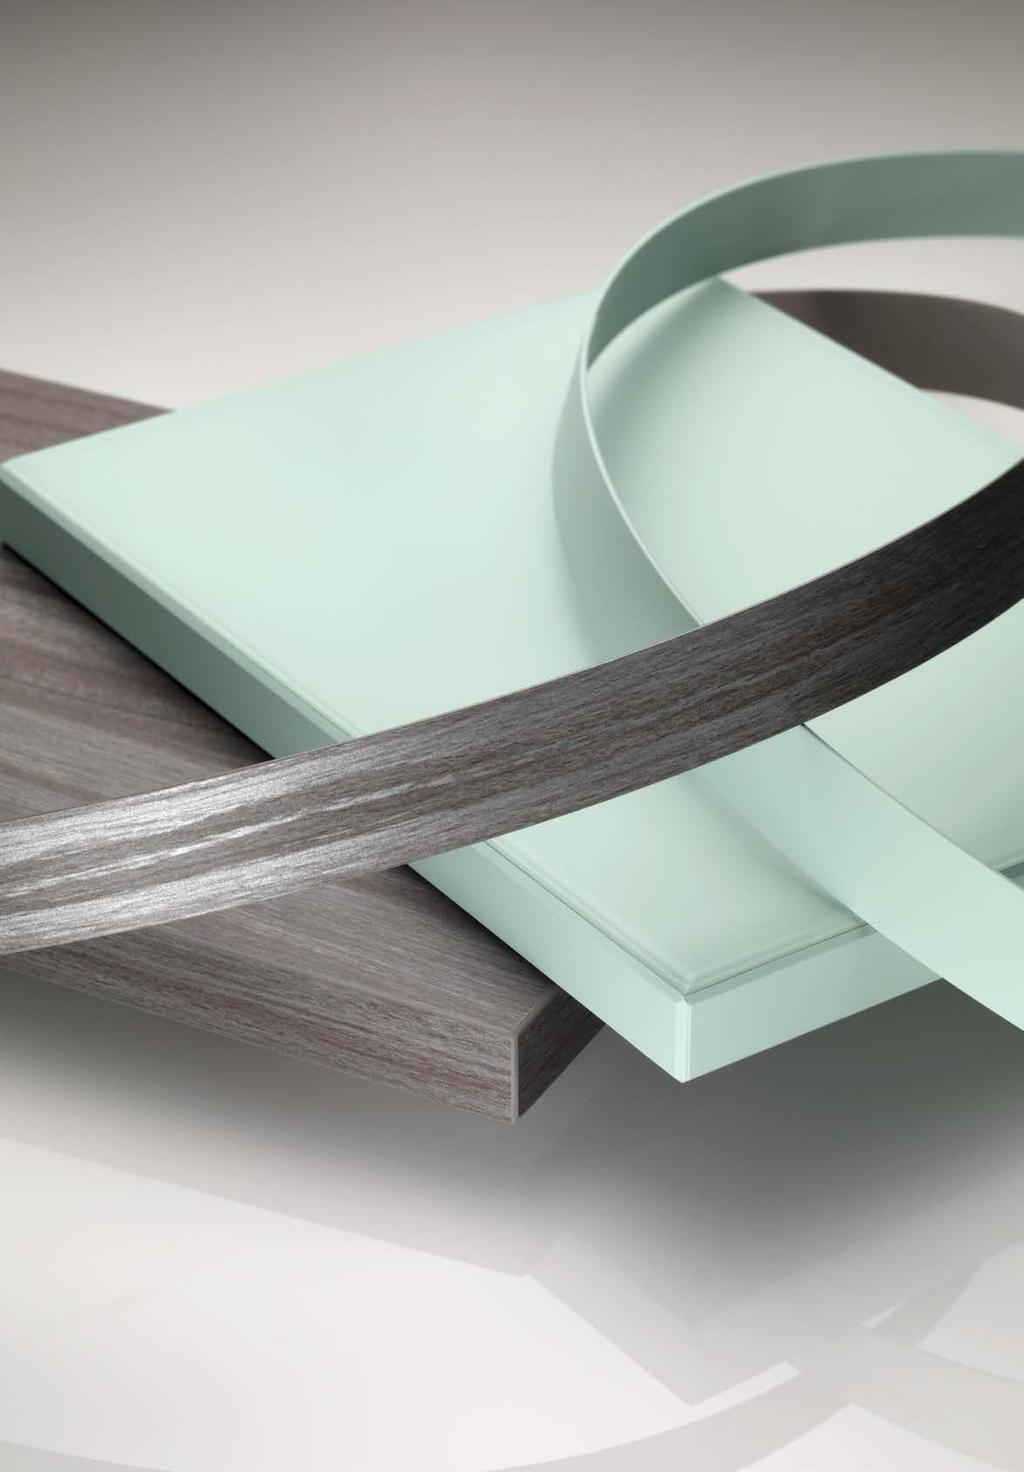 RAUKANTEX COLOR FLAT MATT Premium Collection: Flat matt edgebands 100% compatible with RAUVISIO crystal Flat matt is a brand new surface generation with a gloss level below six gloss points; it